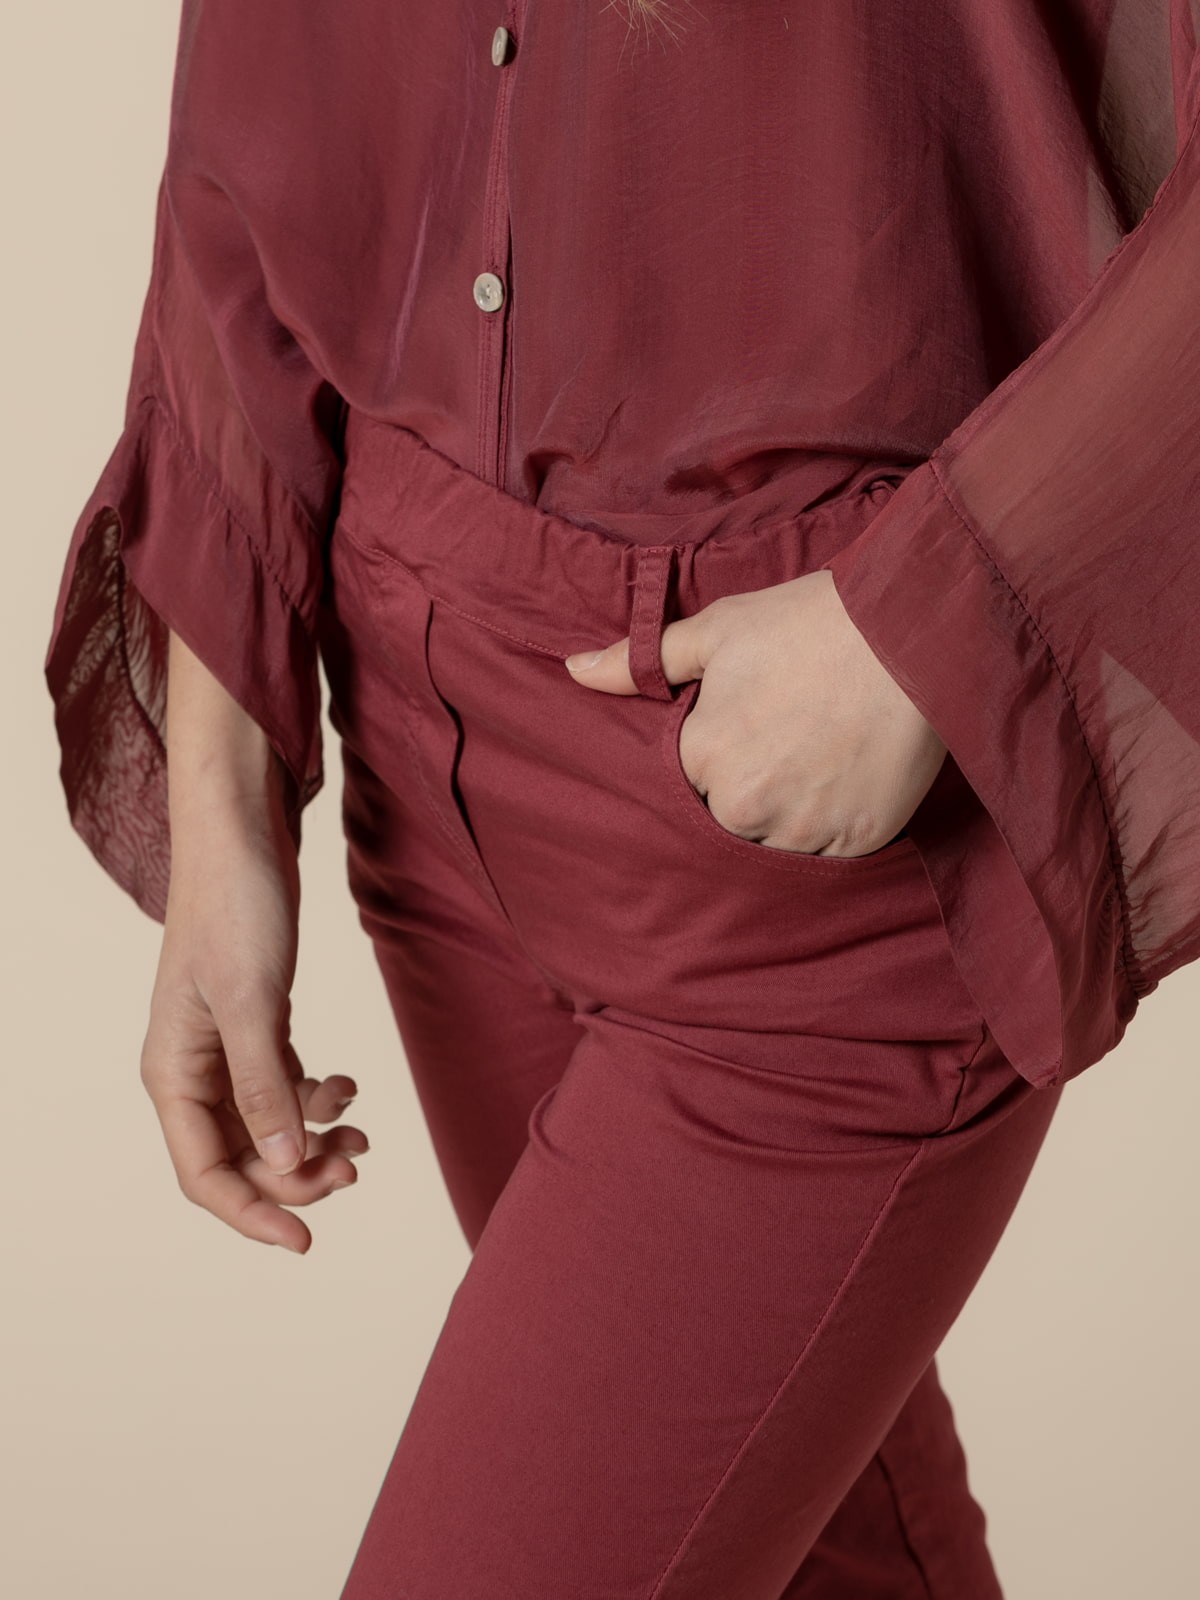 Woman 100% cotton trousers with 4 pockets  Bordeaux